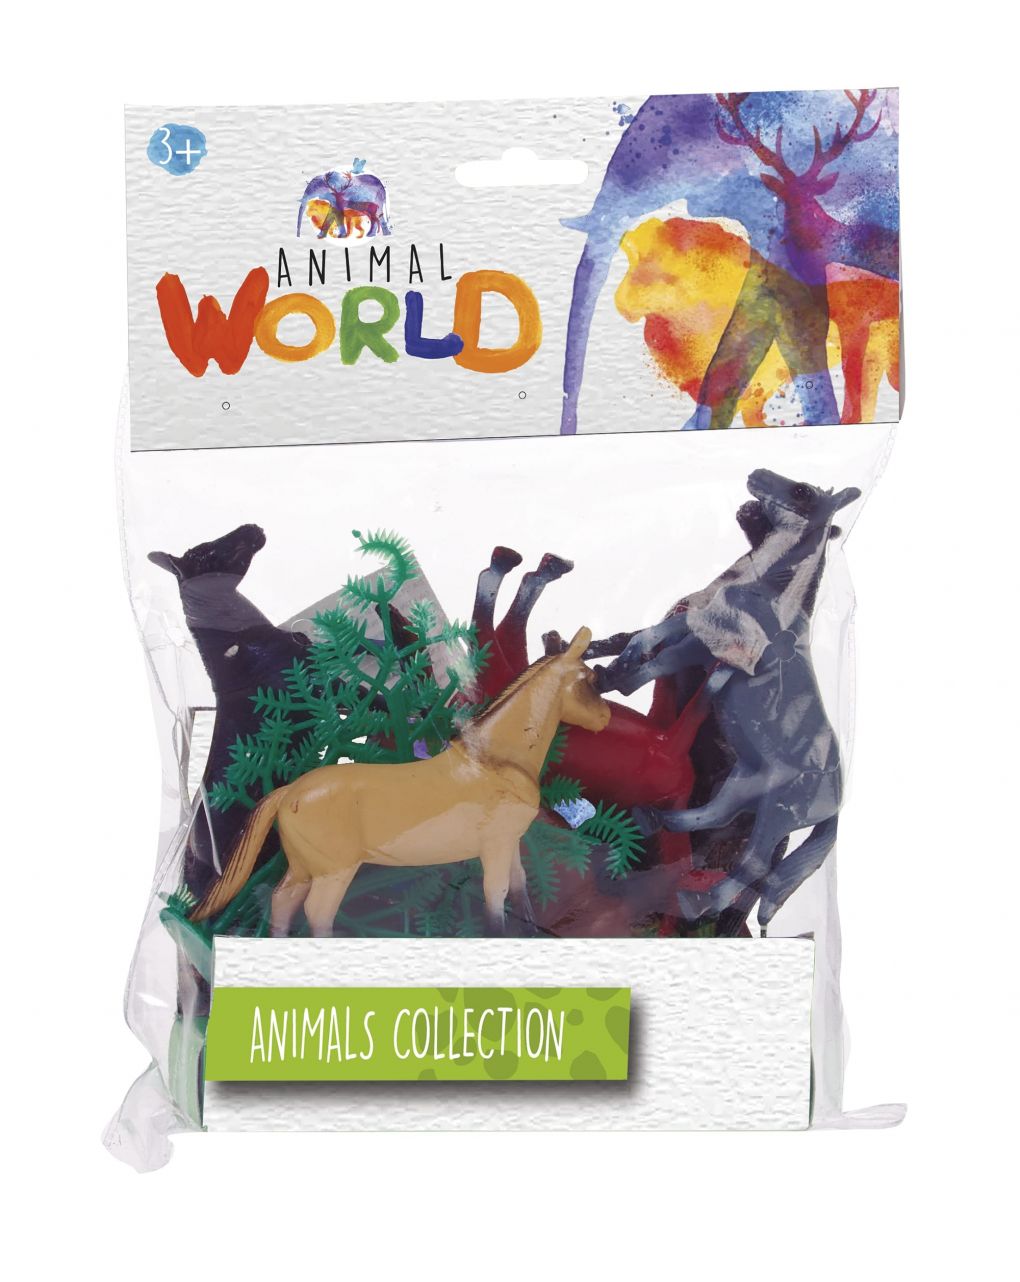 Mundo animal - conjunto animali - coleta de animais - Animal World